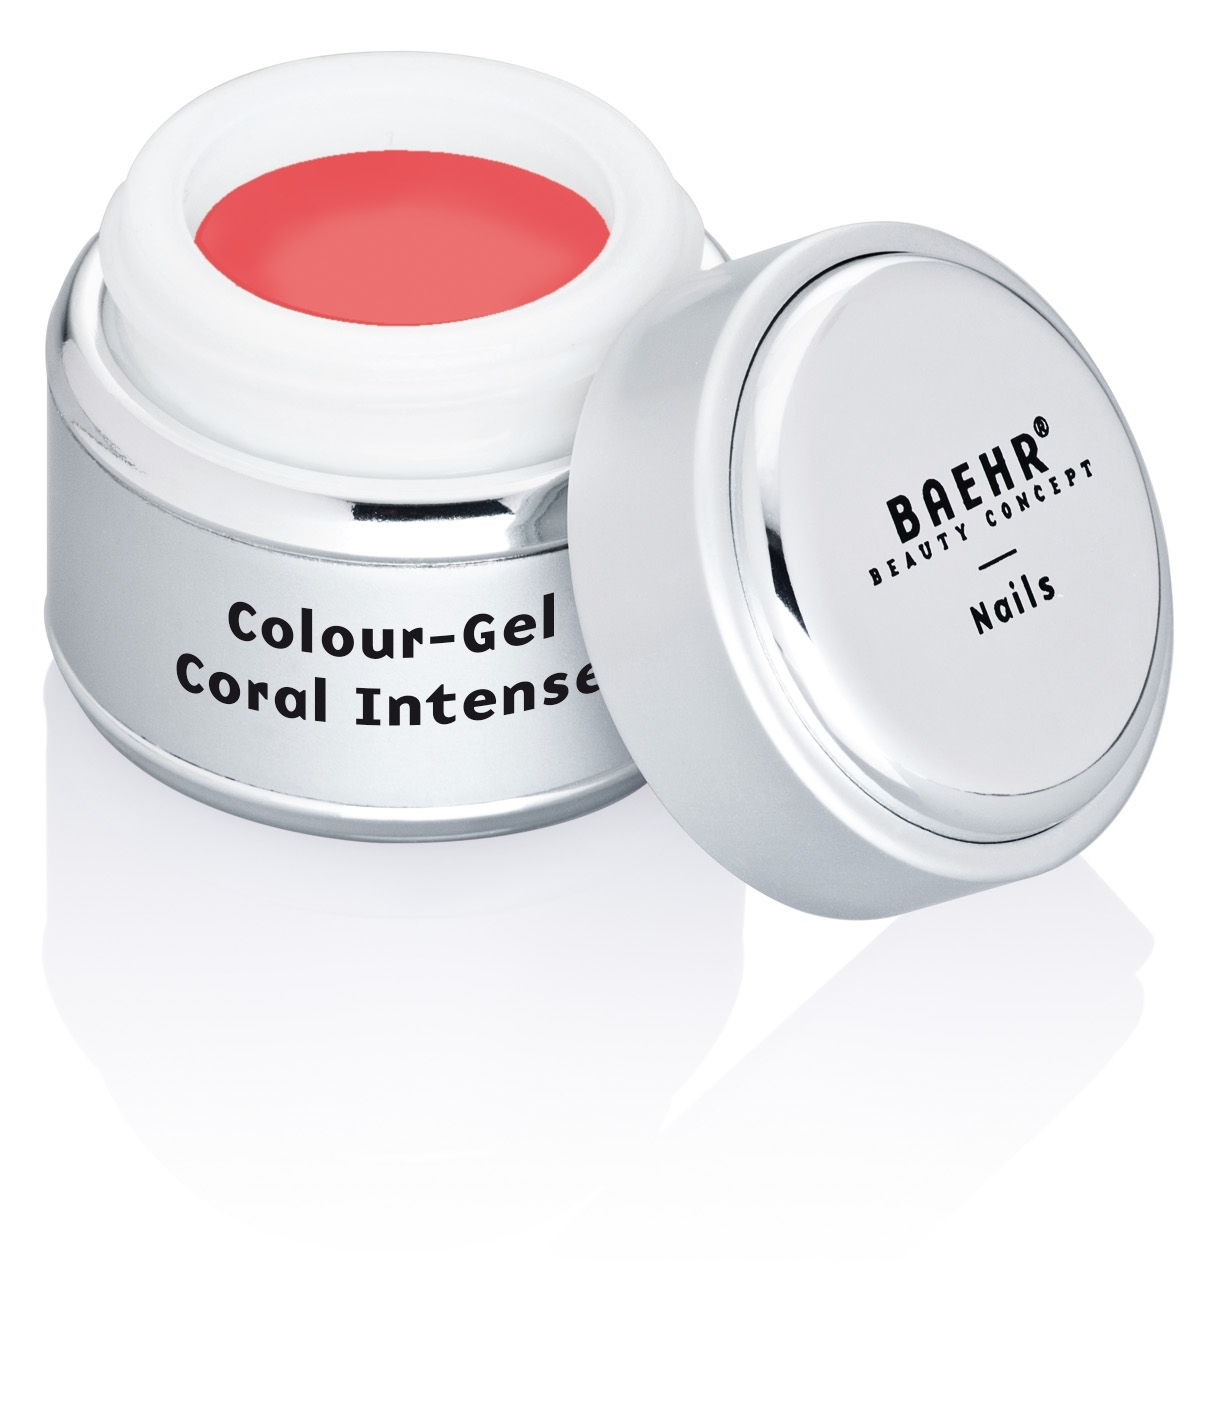 BAEHR BEAUTY CONCEPT - NAILS Colour-Gel Coral Intense 5 ml